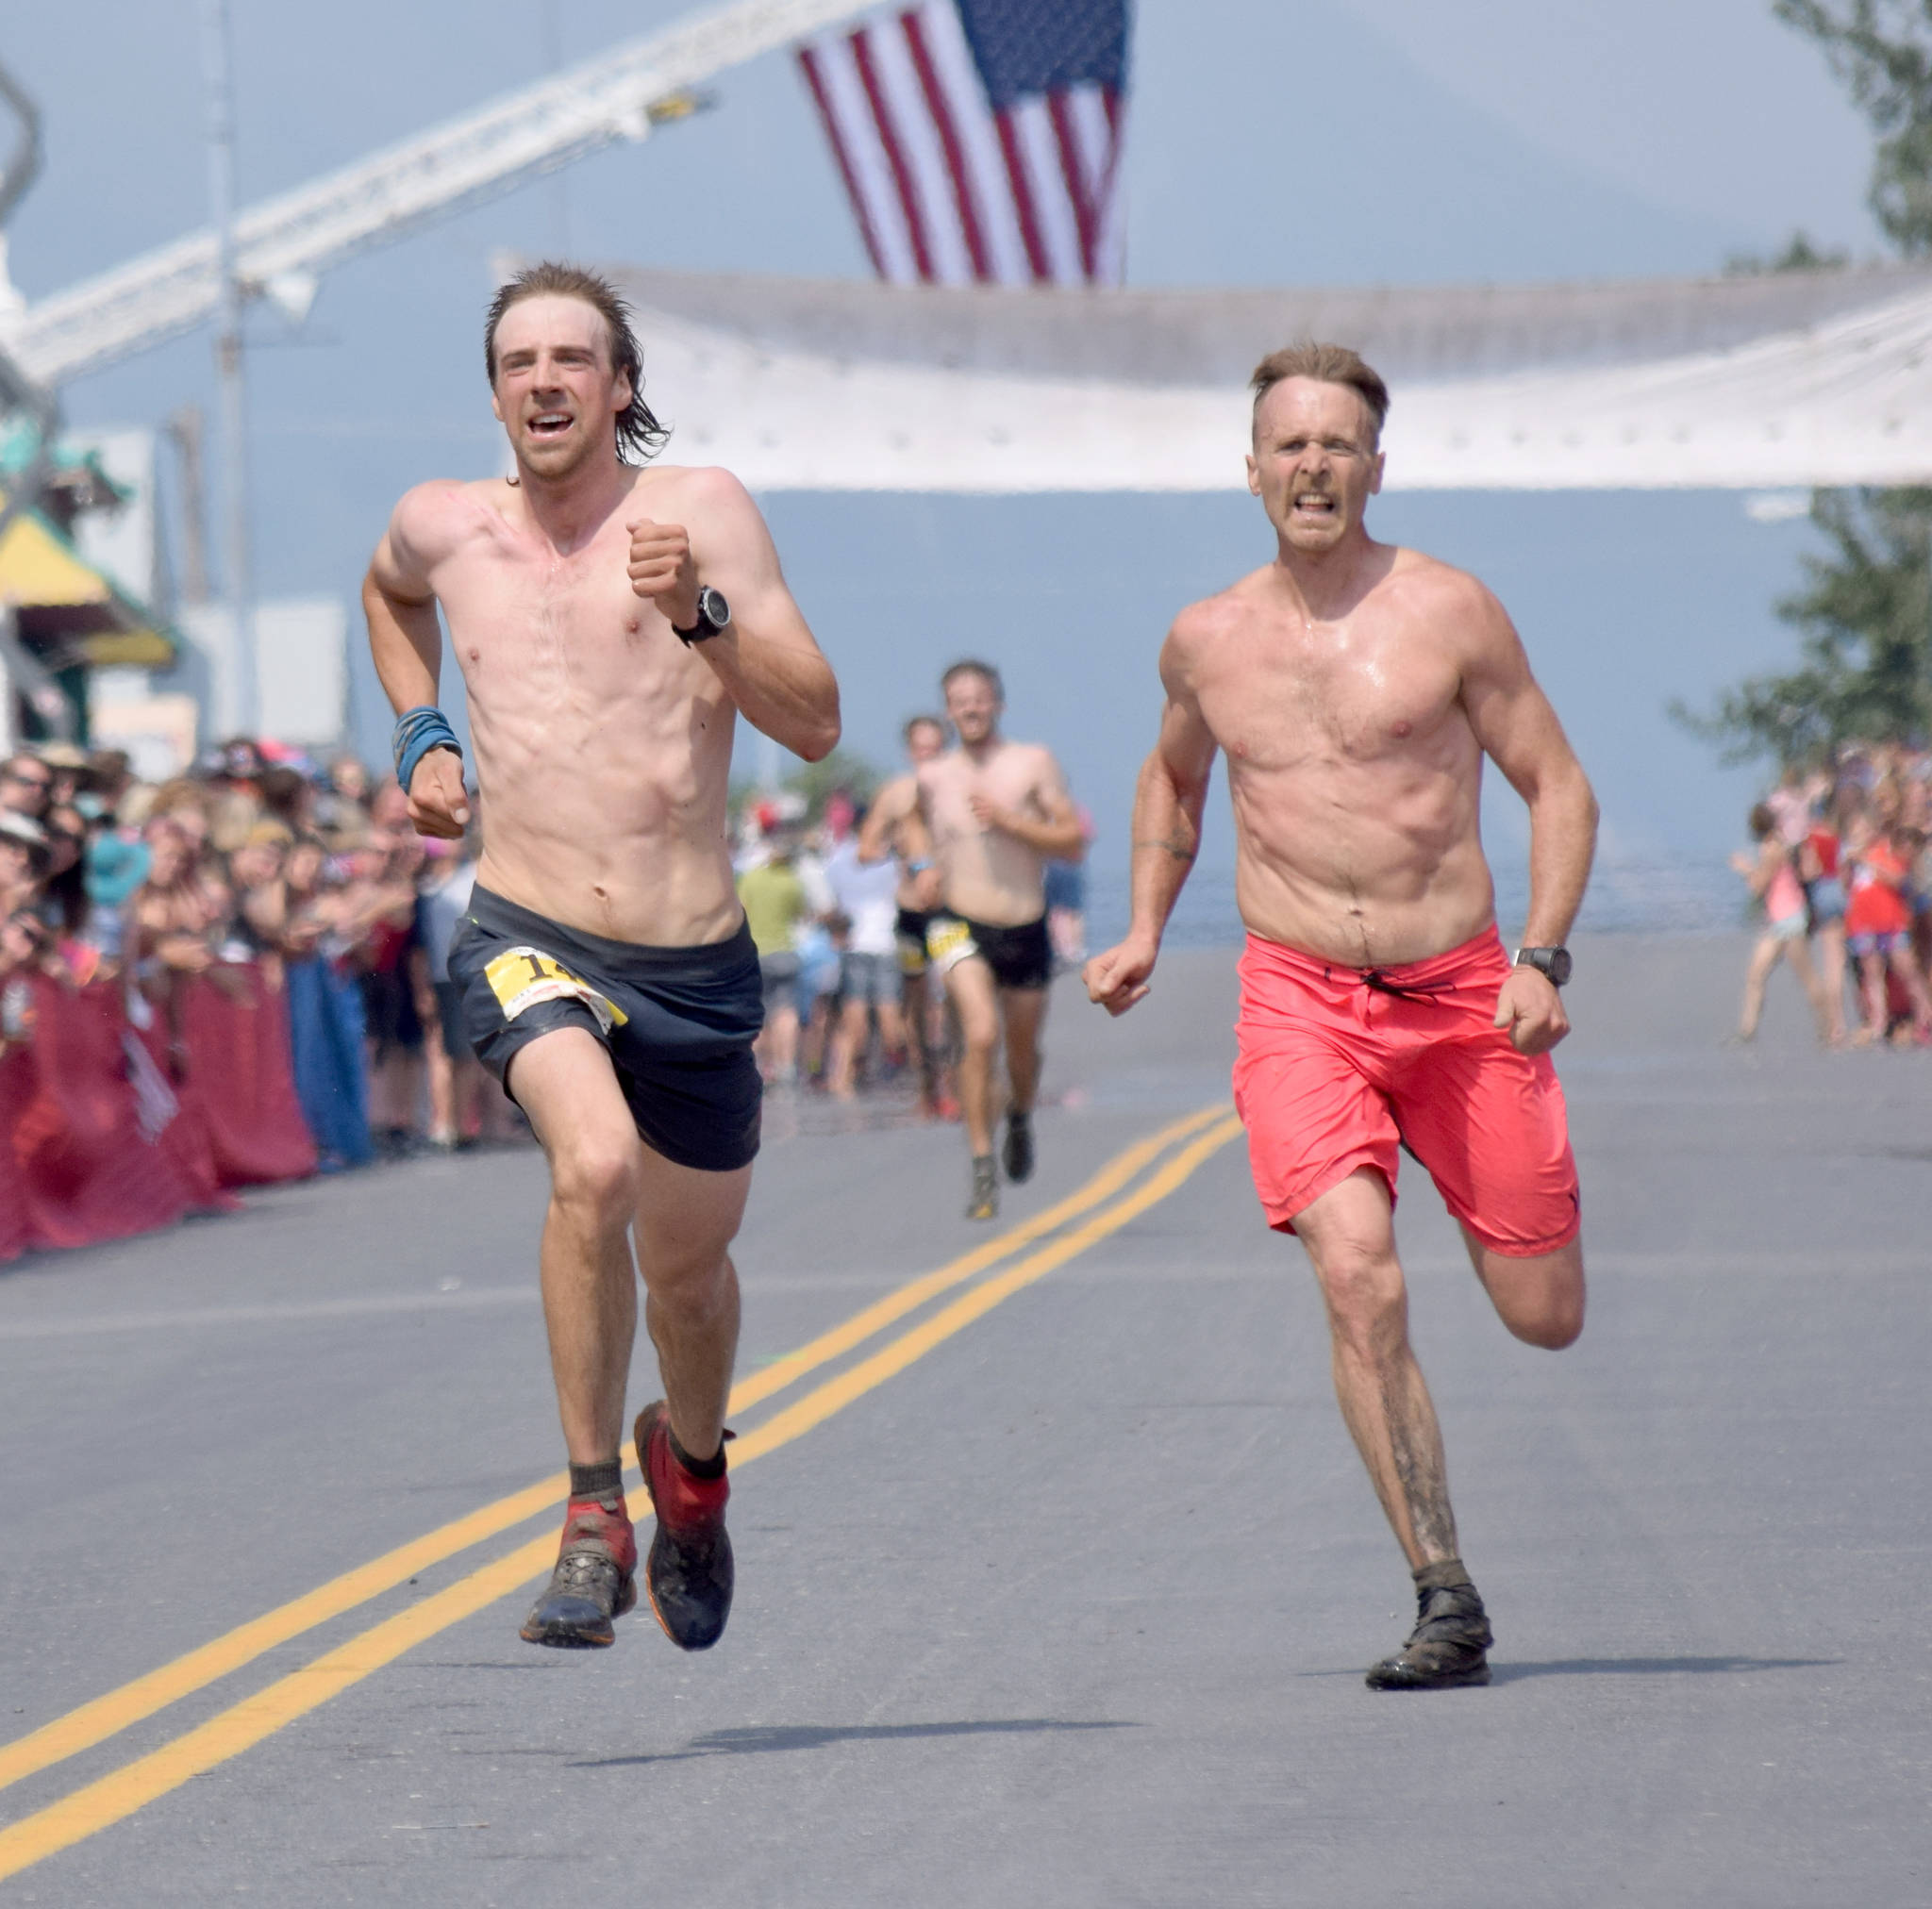 Pyper Dixon and Erik Johnson, both of Seward, sprint for the finish of the Mount Marathon Race on Thursday, July 4, 2019, in Seward, Alaska. (Photo by Jeff Helminiak/Peninsula Clarion)